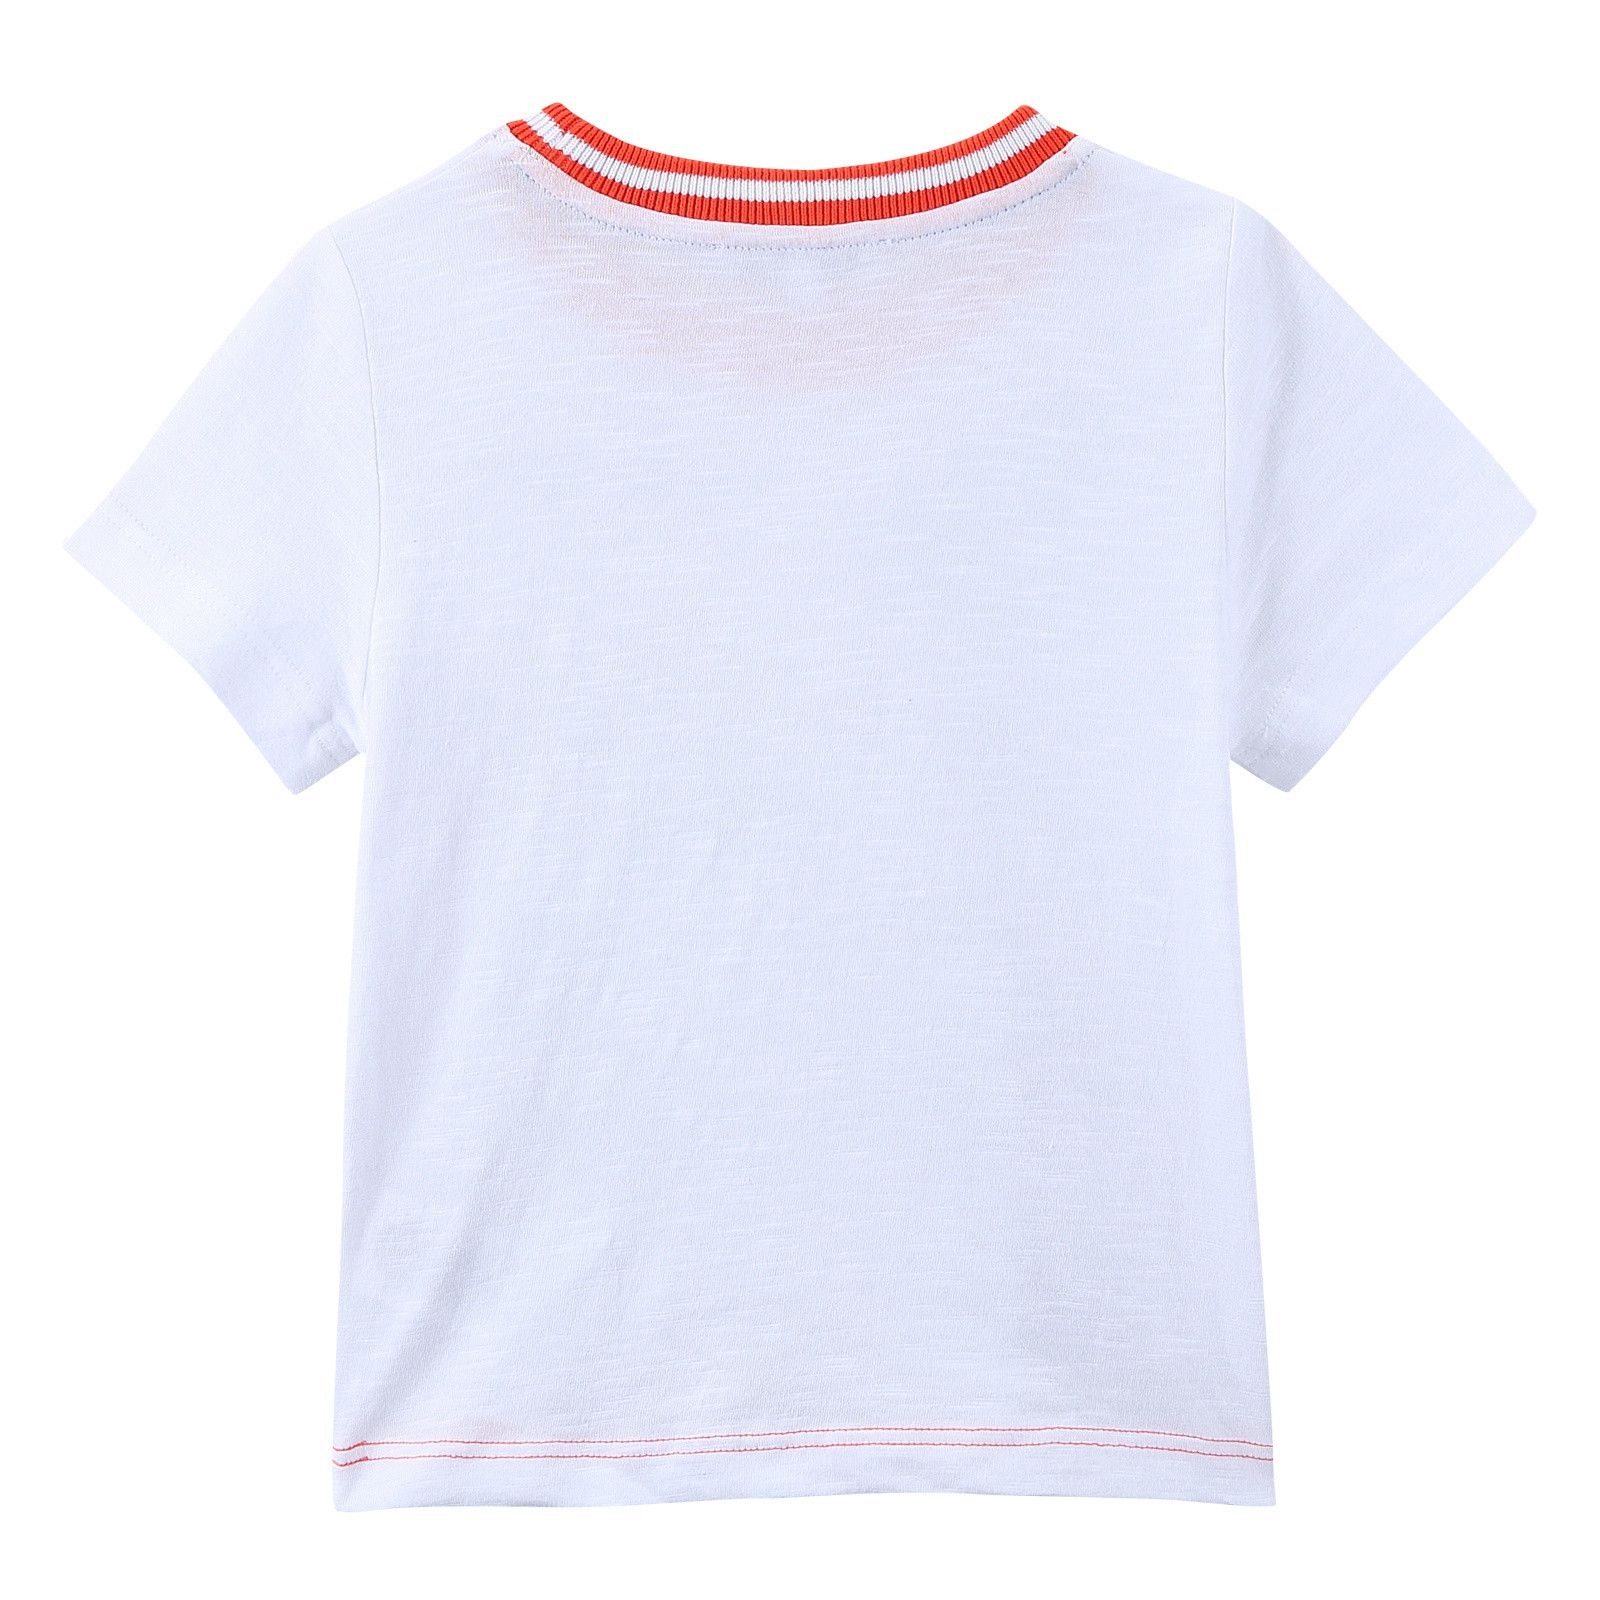 Boys White Fancy Illustration Printed Cotton Jersey T-Shirt - CÉMAROSE | Children's Fashion Store - 2